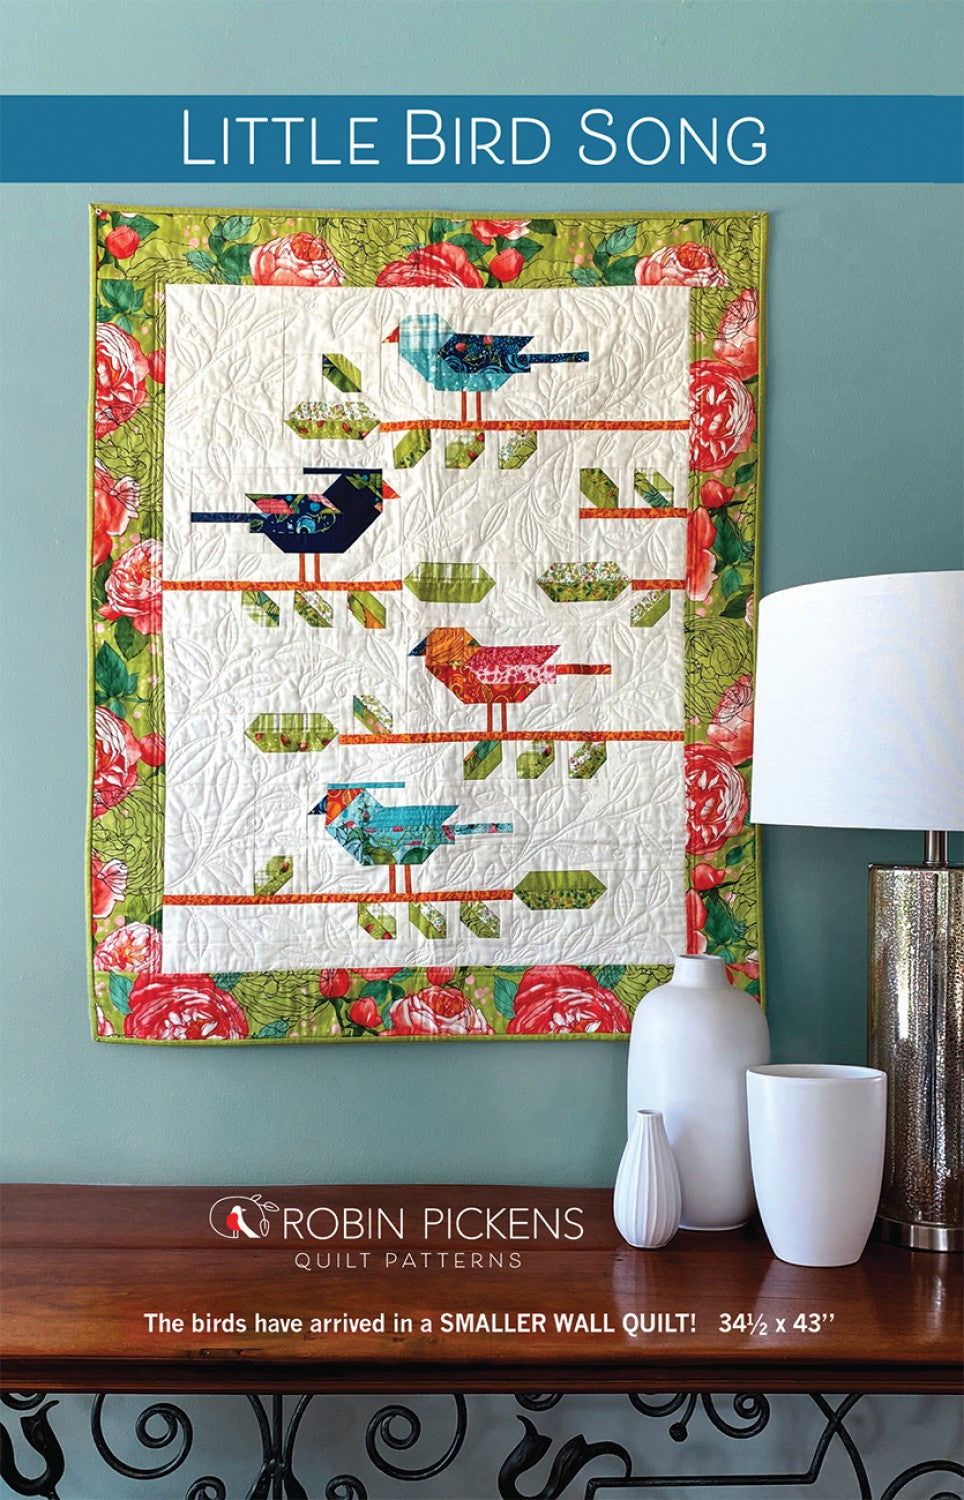 Little Bird Song by Robin Pickens